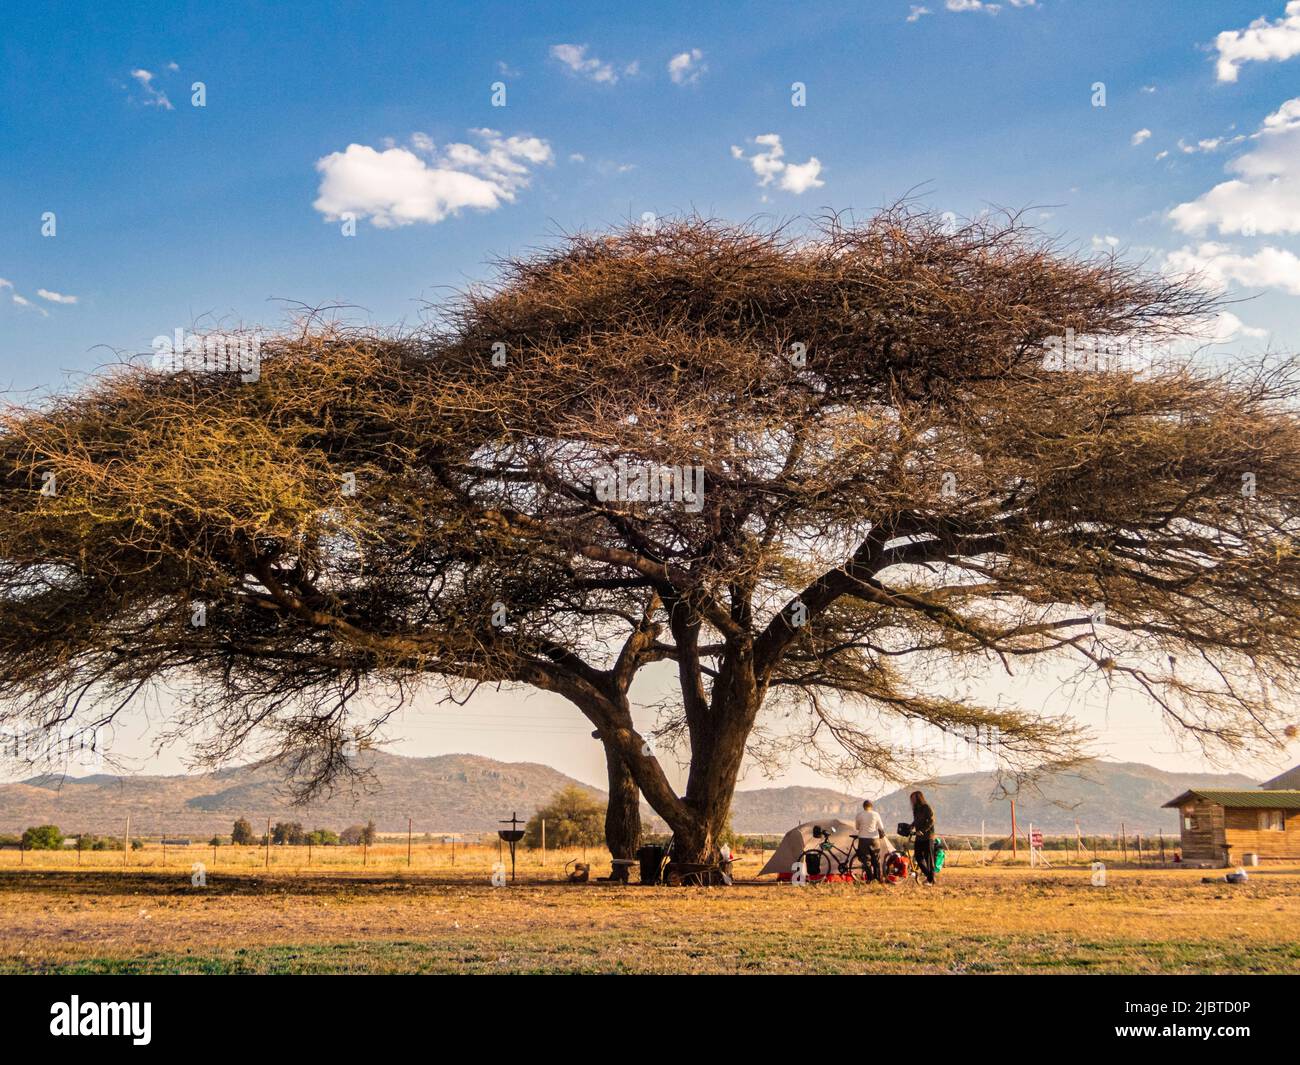 Namibia, Otjozondjupa region, Grootfontein, Meteorite camp, cyclo-tourist camp under a large tree Stock Photo